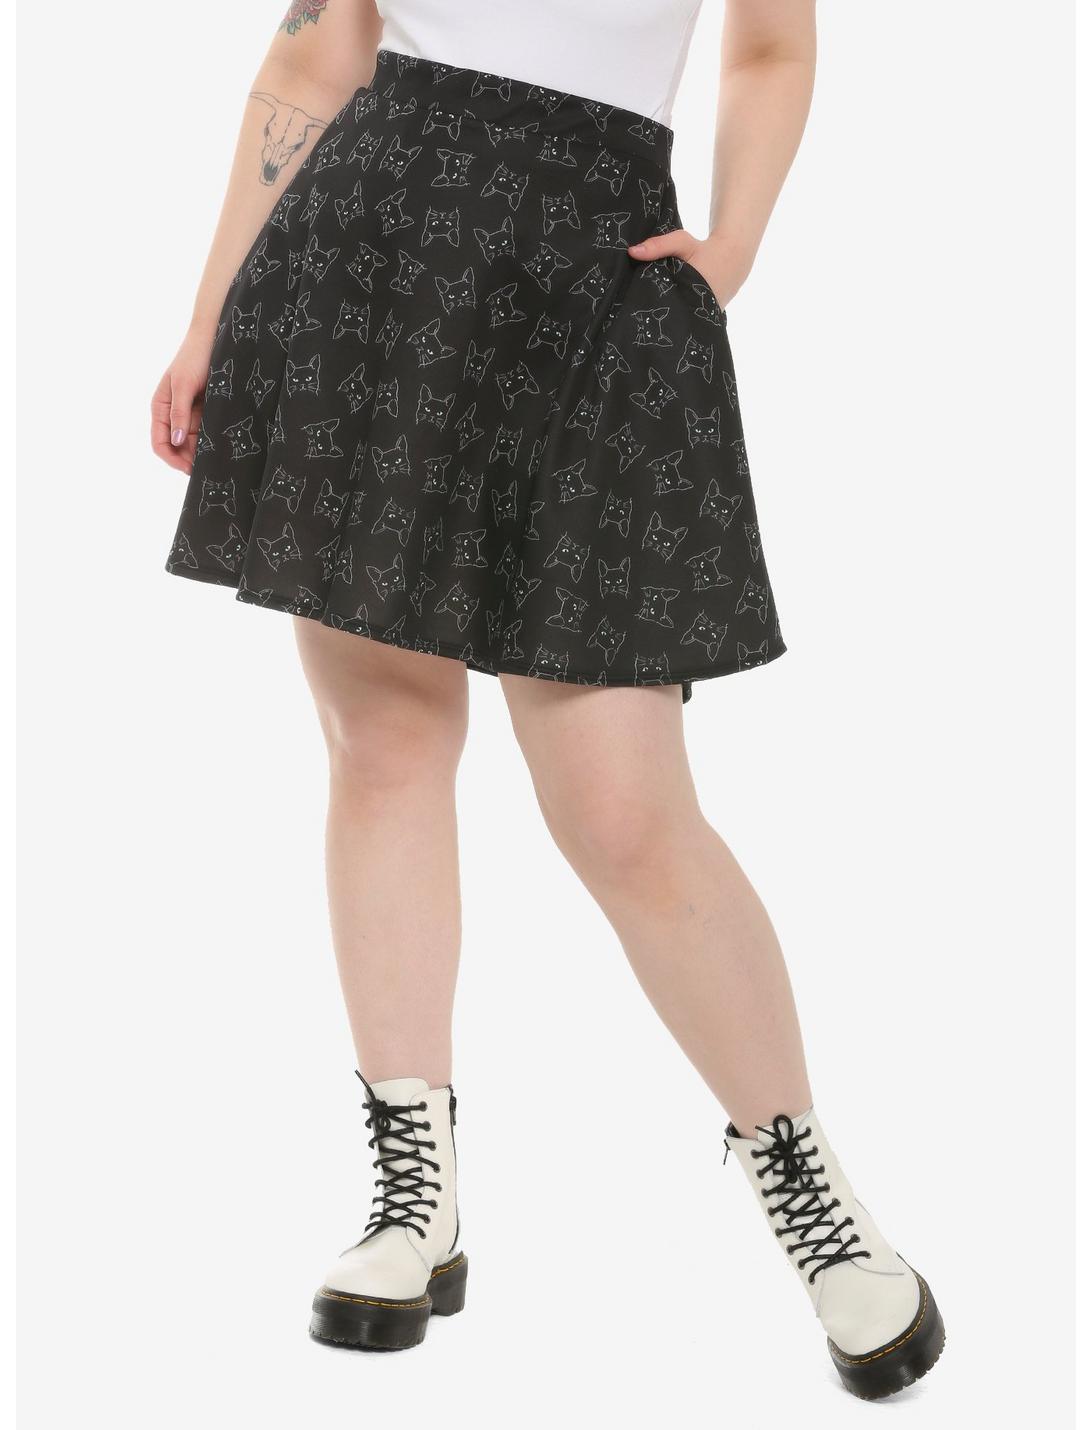 Black Cat Skater Skirt Plus Size, MULTI, hi-res